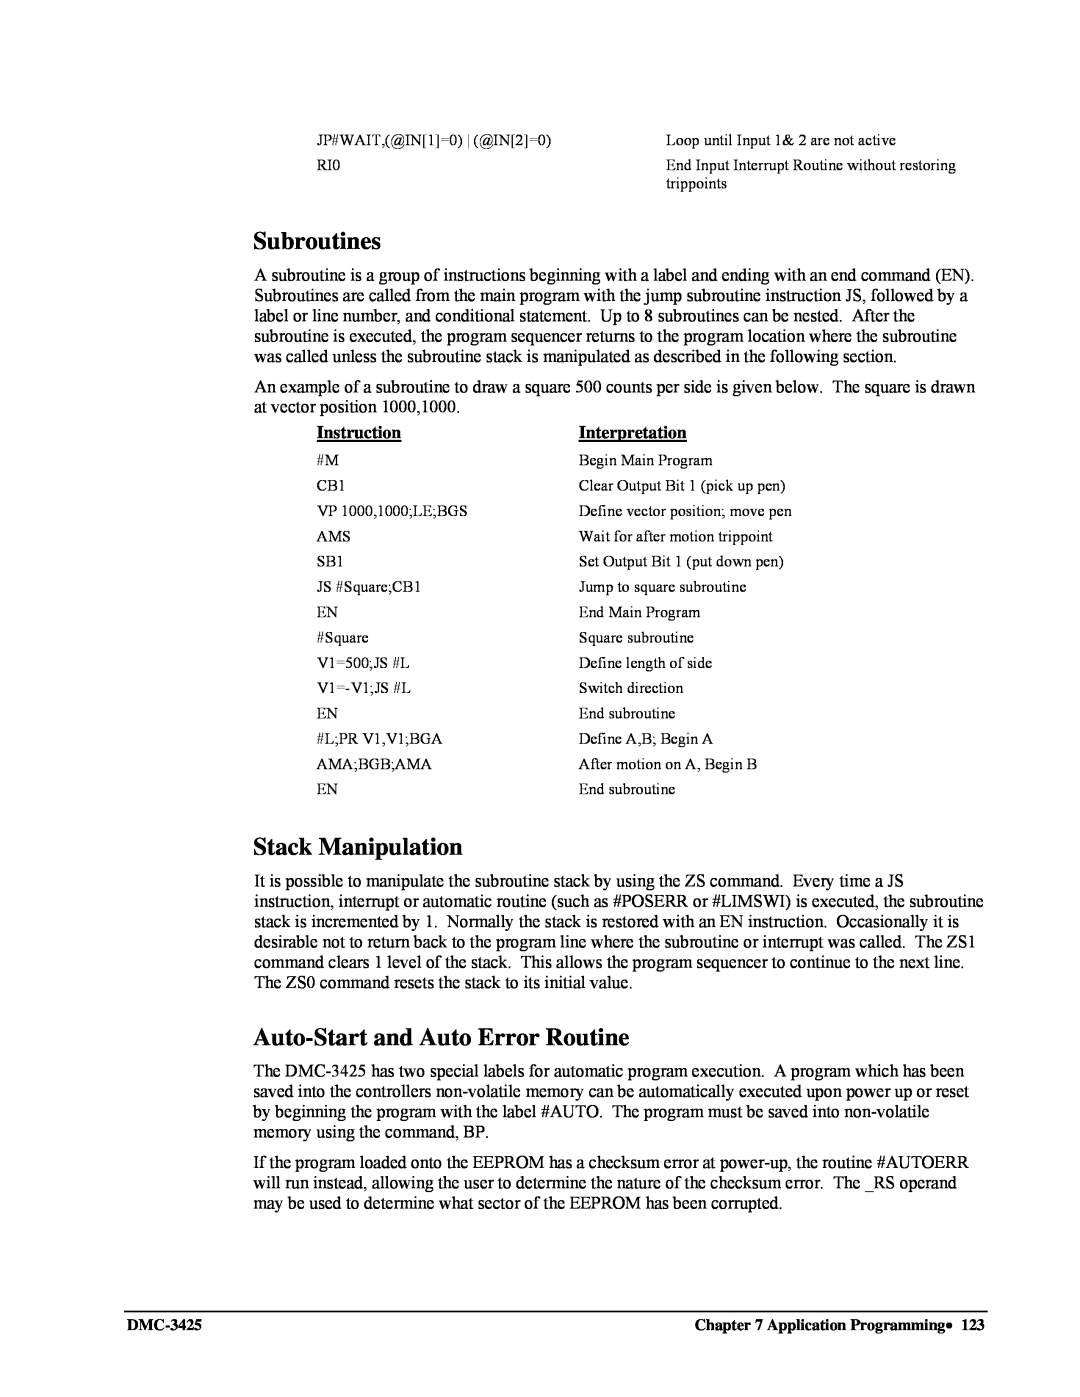 Galil DMC-3425 user manual Subroutines, Stack Manipulation, Auto-Startand Auto Error Routine 